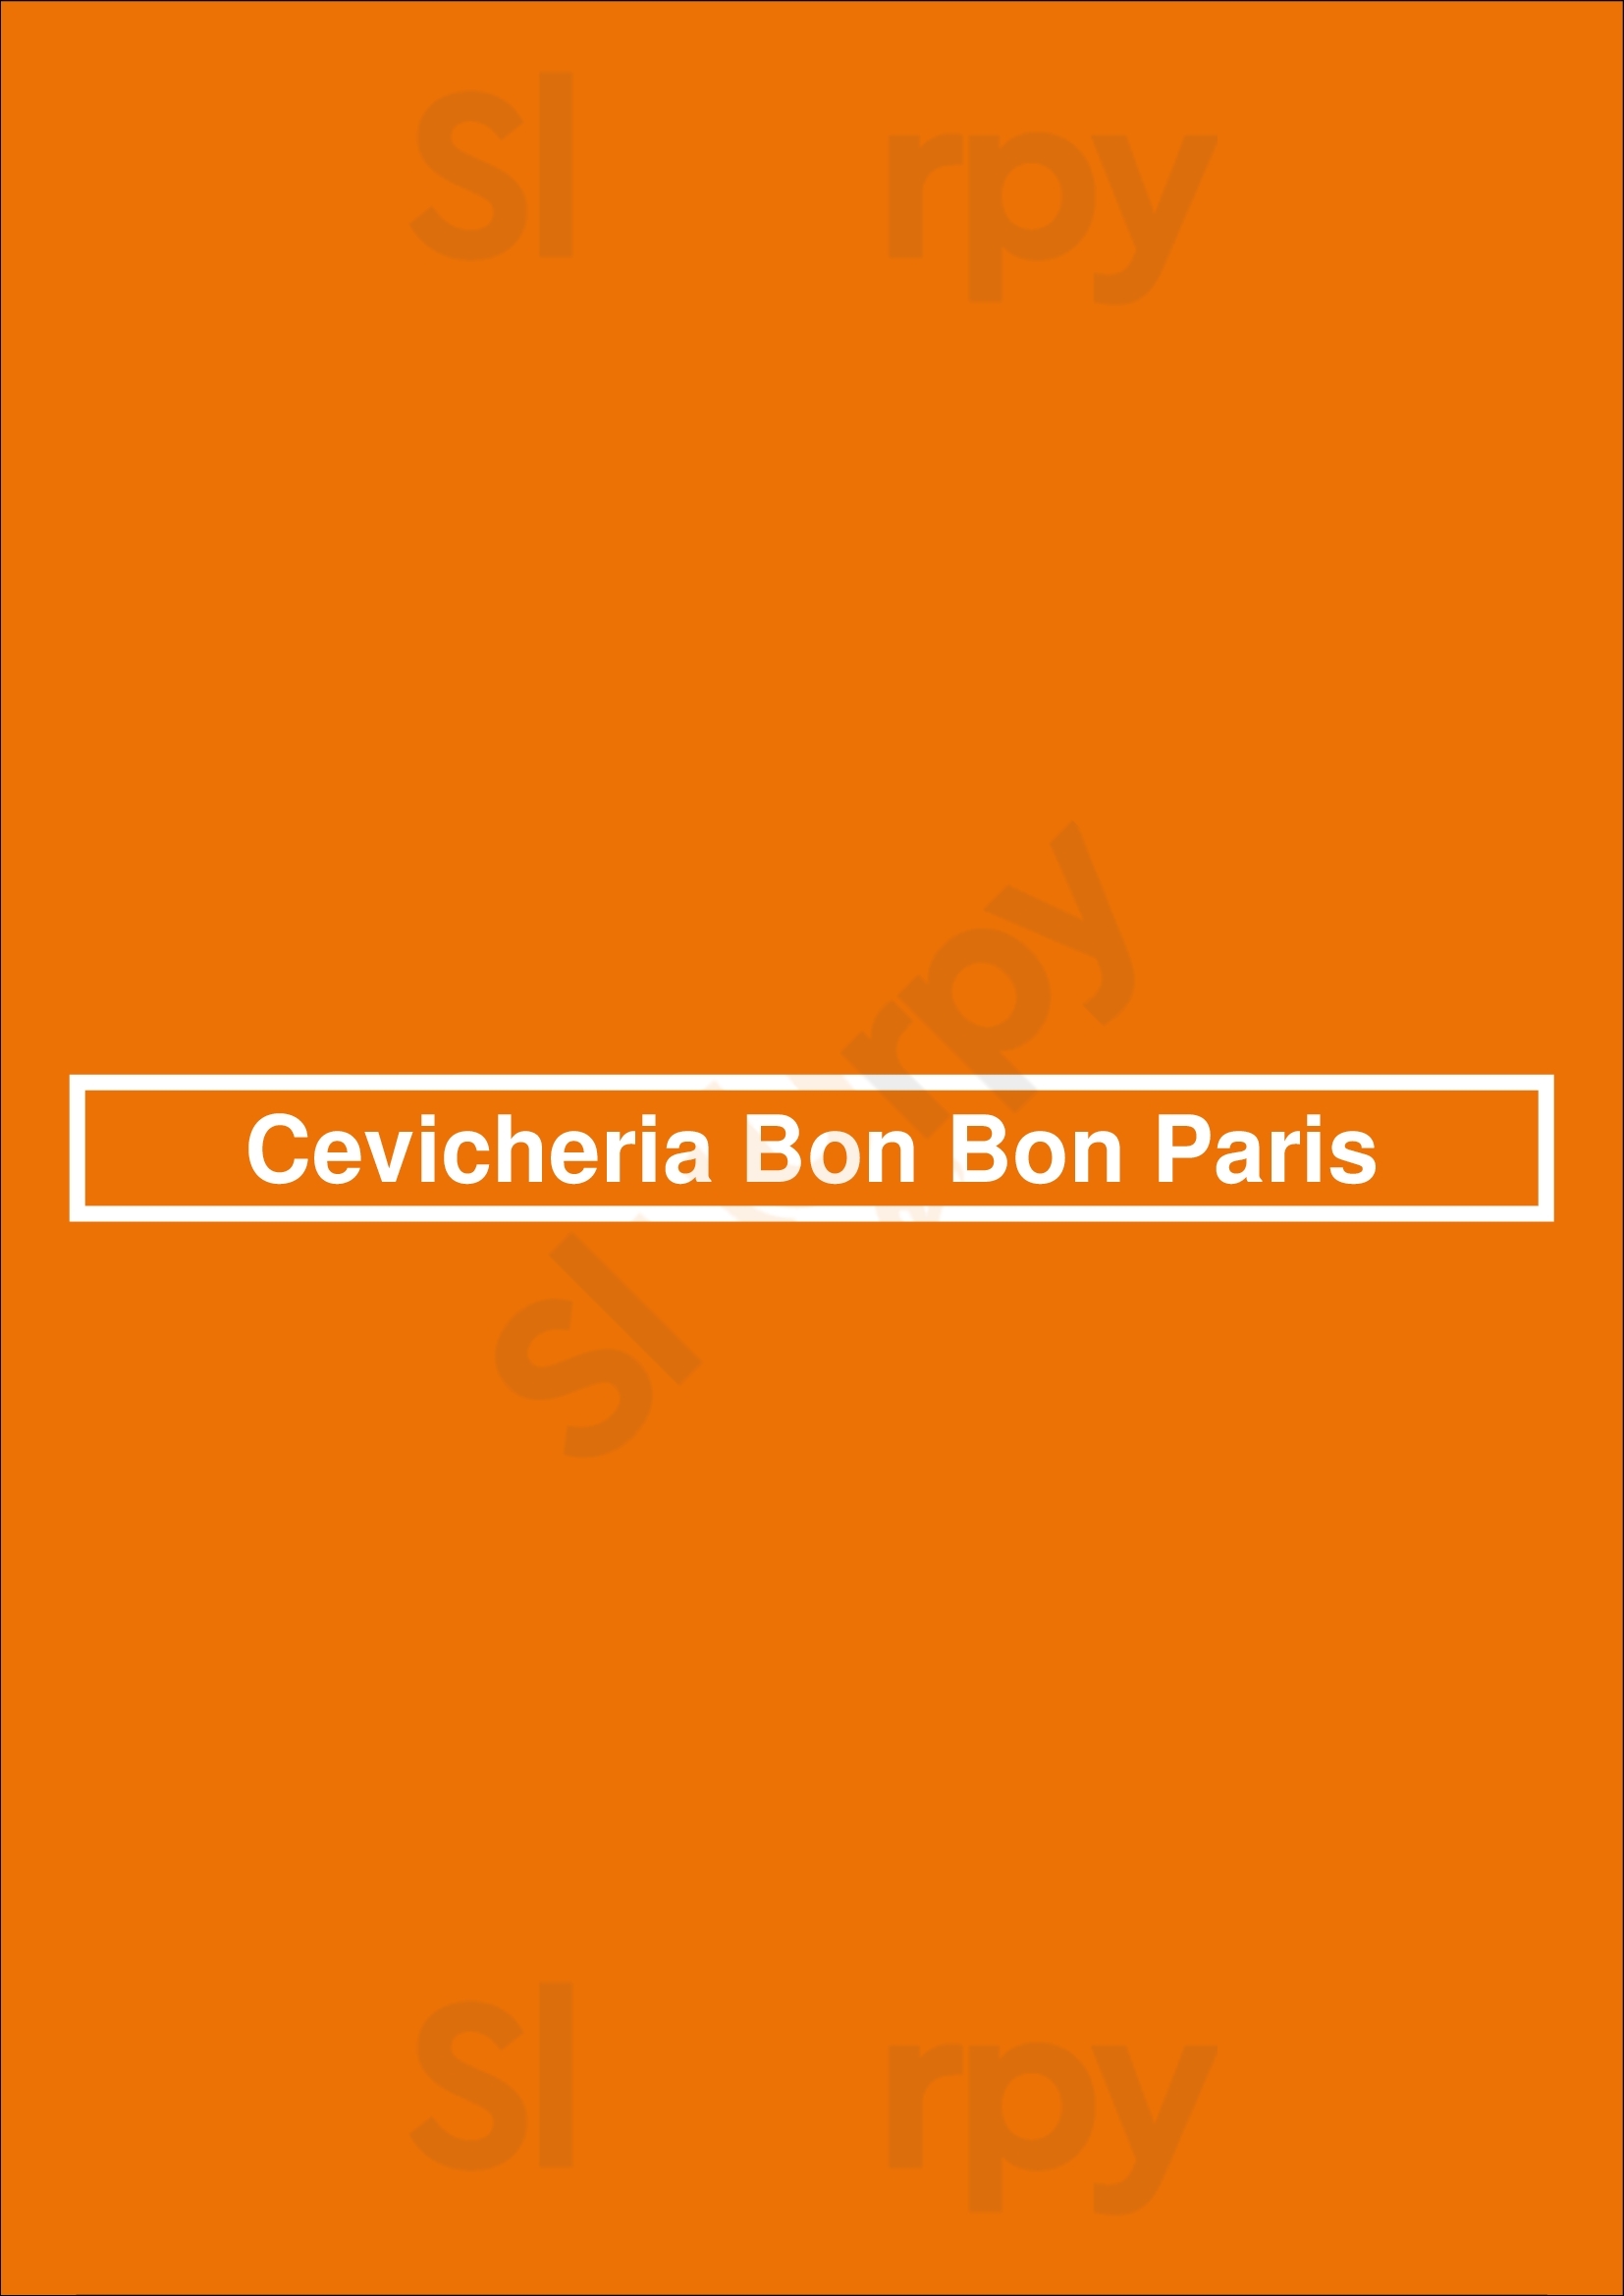 Cevicheria Bon Bon Paris Menu - 1